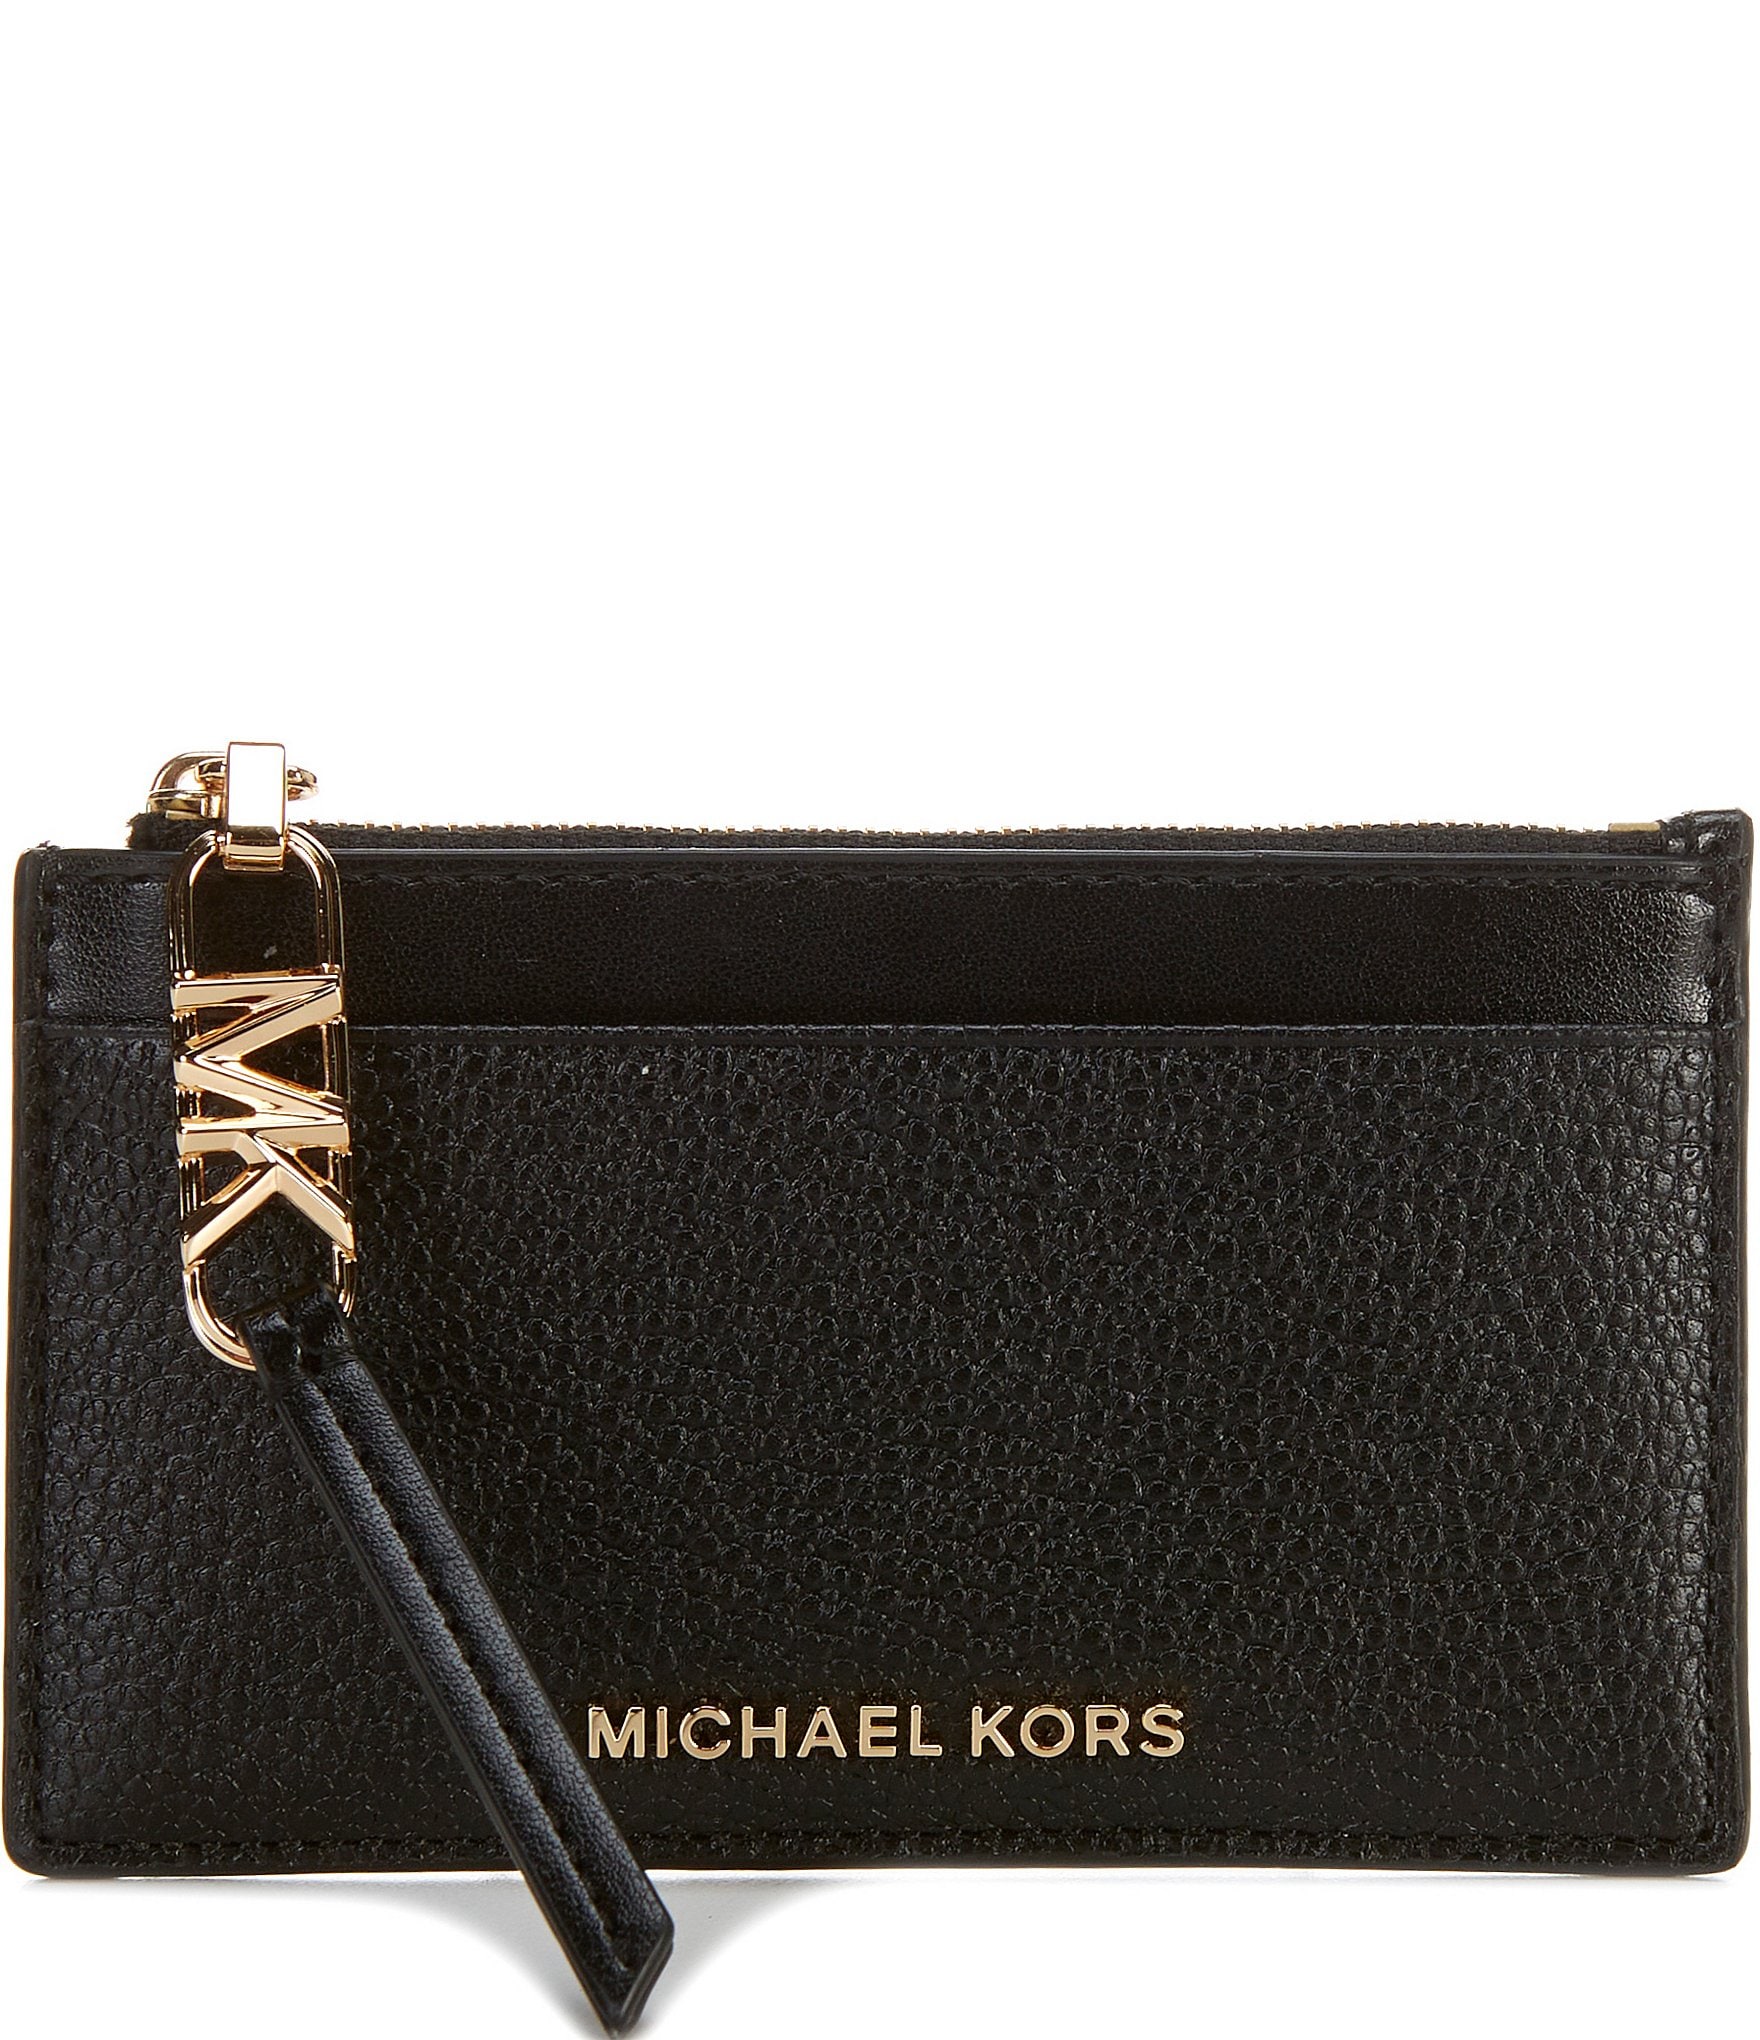  Michael Kors Women's Bifold Wallet, Black Saffiano, M